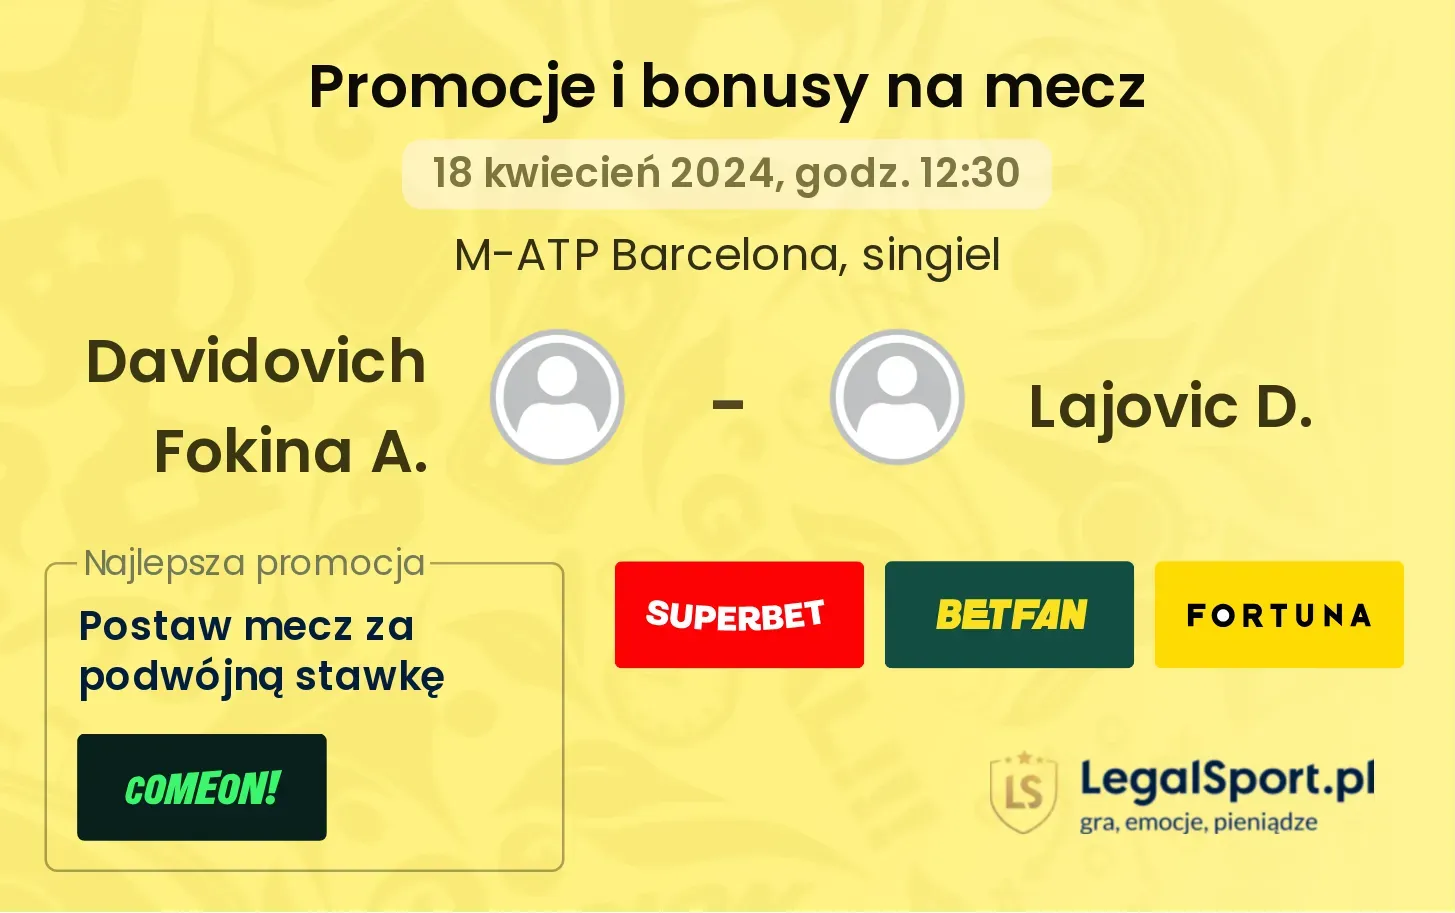 Davidovich Fokina A. - Lajovic D. promocje bonusy na mecz